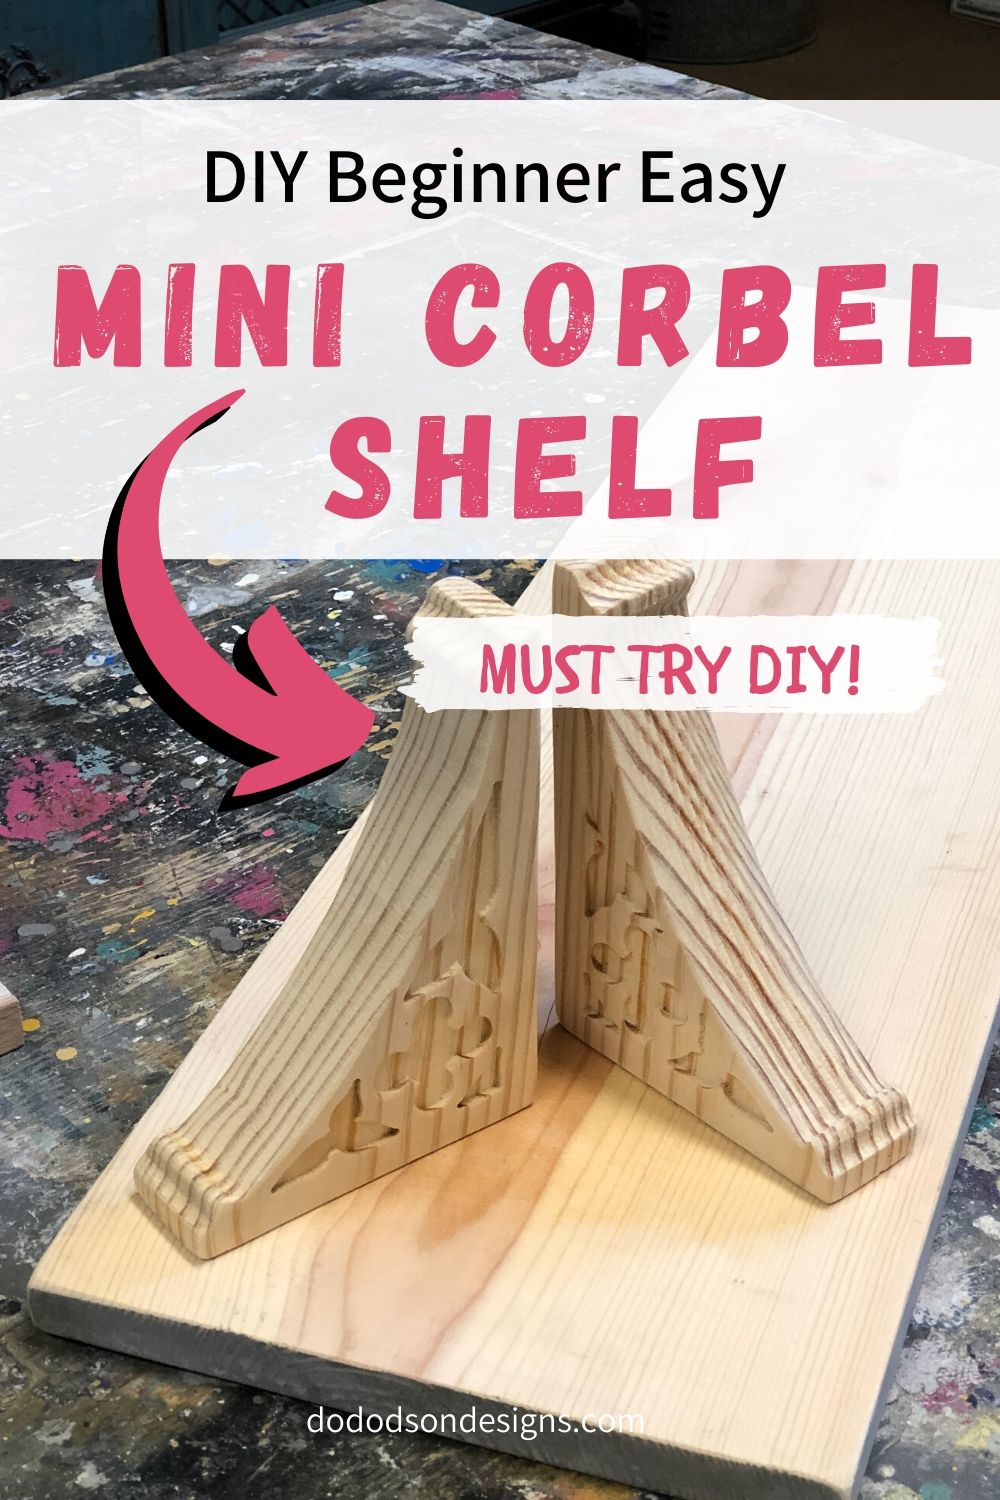 Mini Corbel Shelf | Beginner Easy DIY